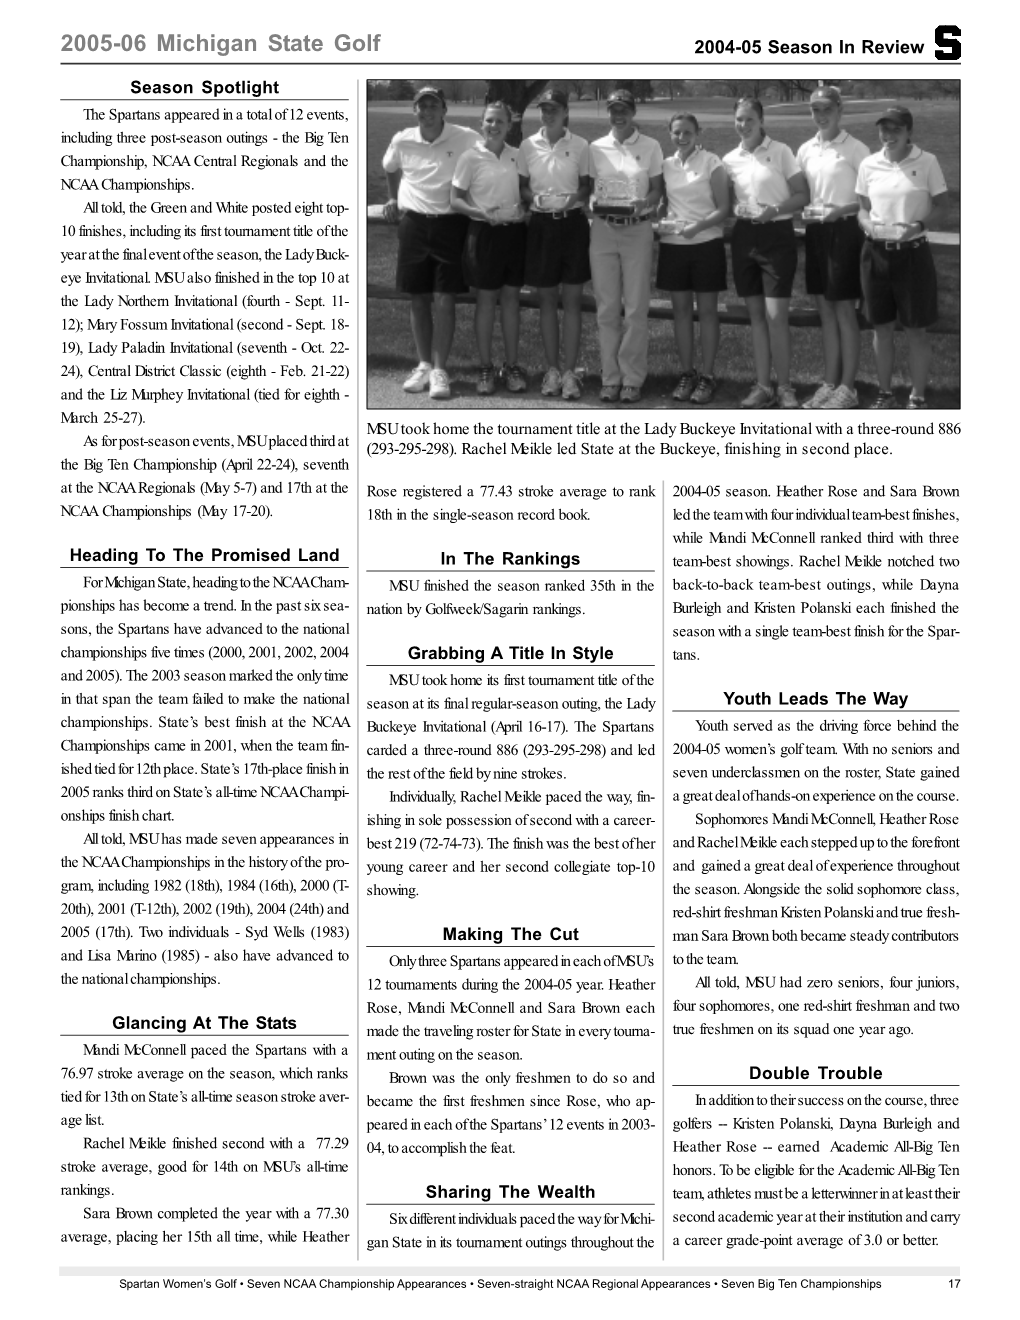 2005-06 Michigan State Golf 2004-05 Season in Review